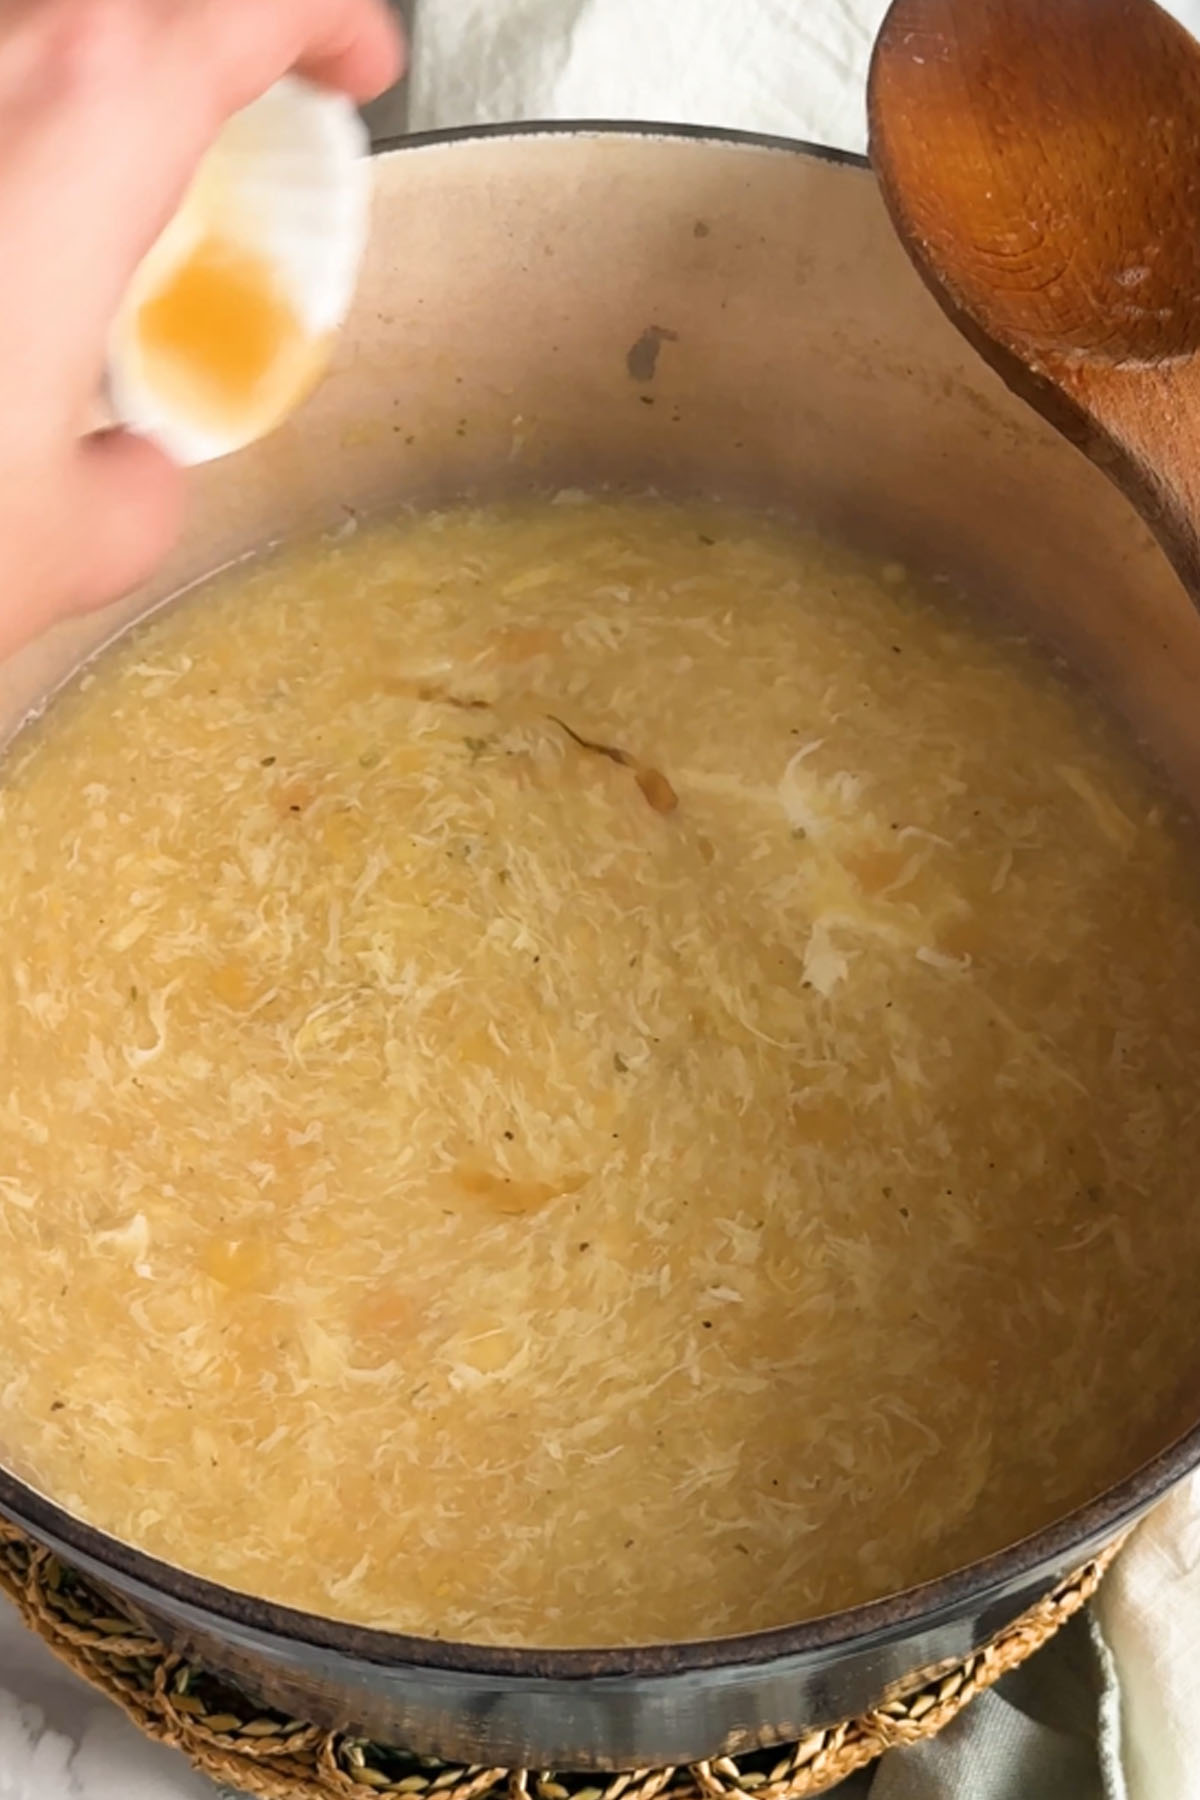 Sesame oil is poured into a pot of egg drop soup.